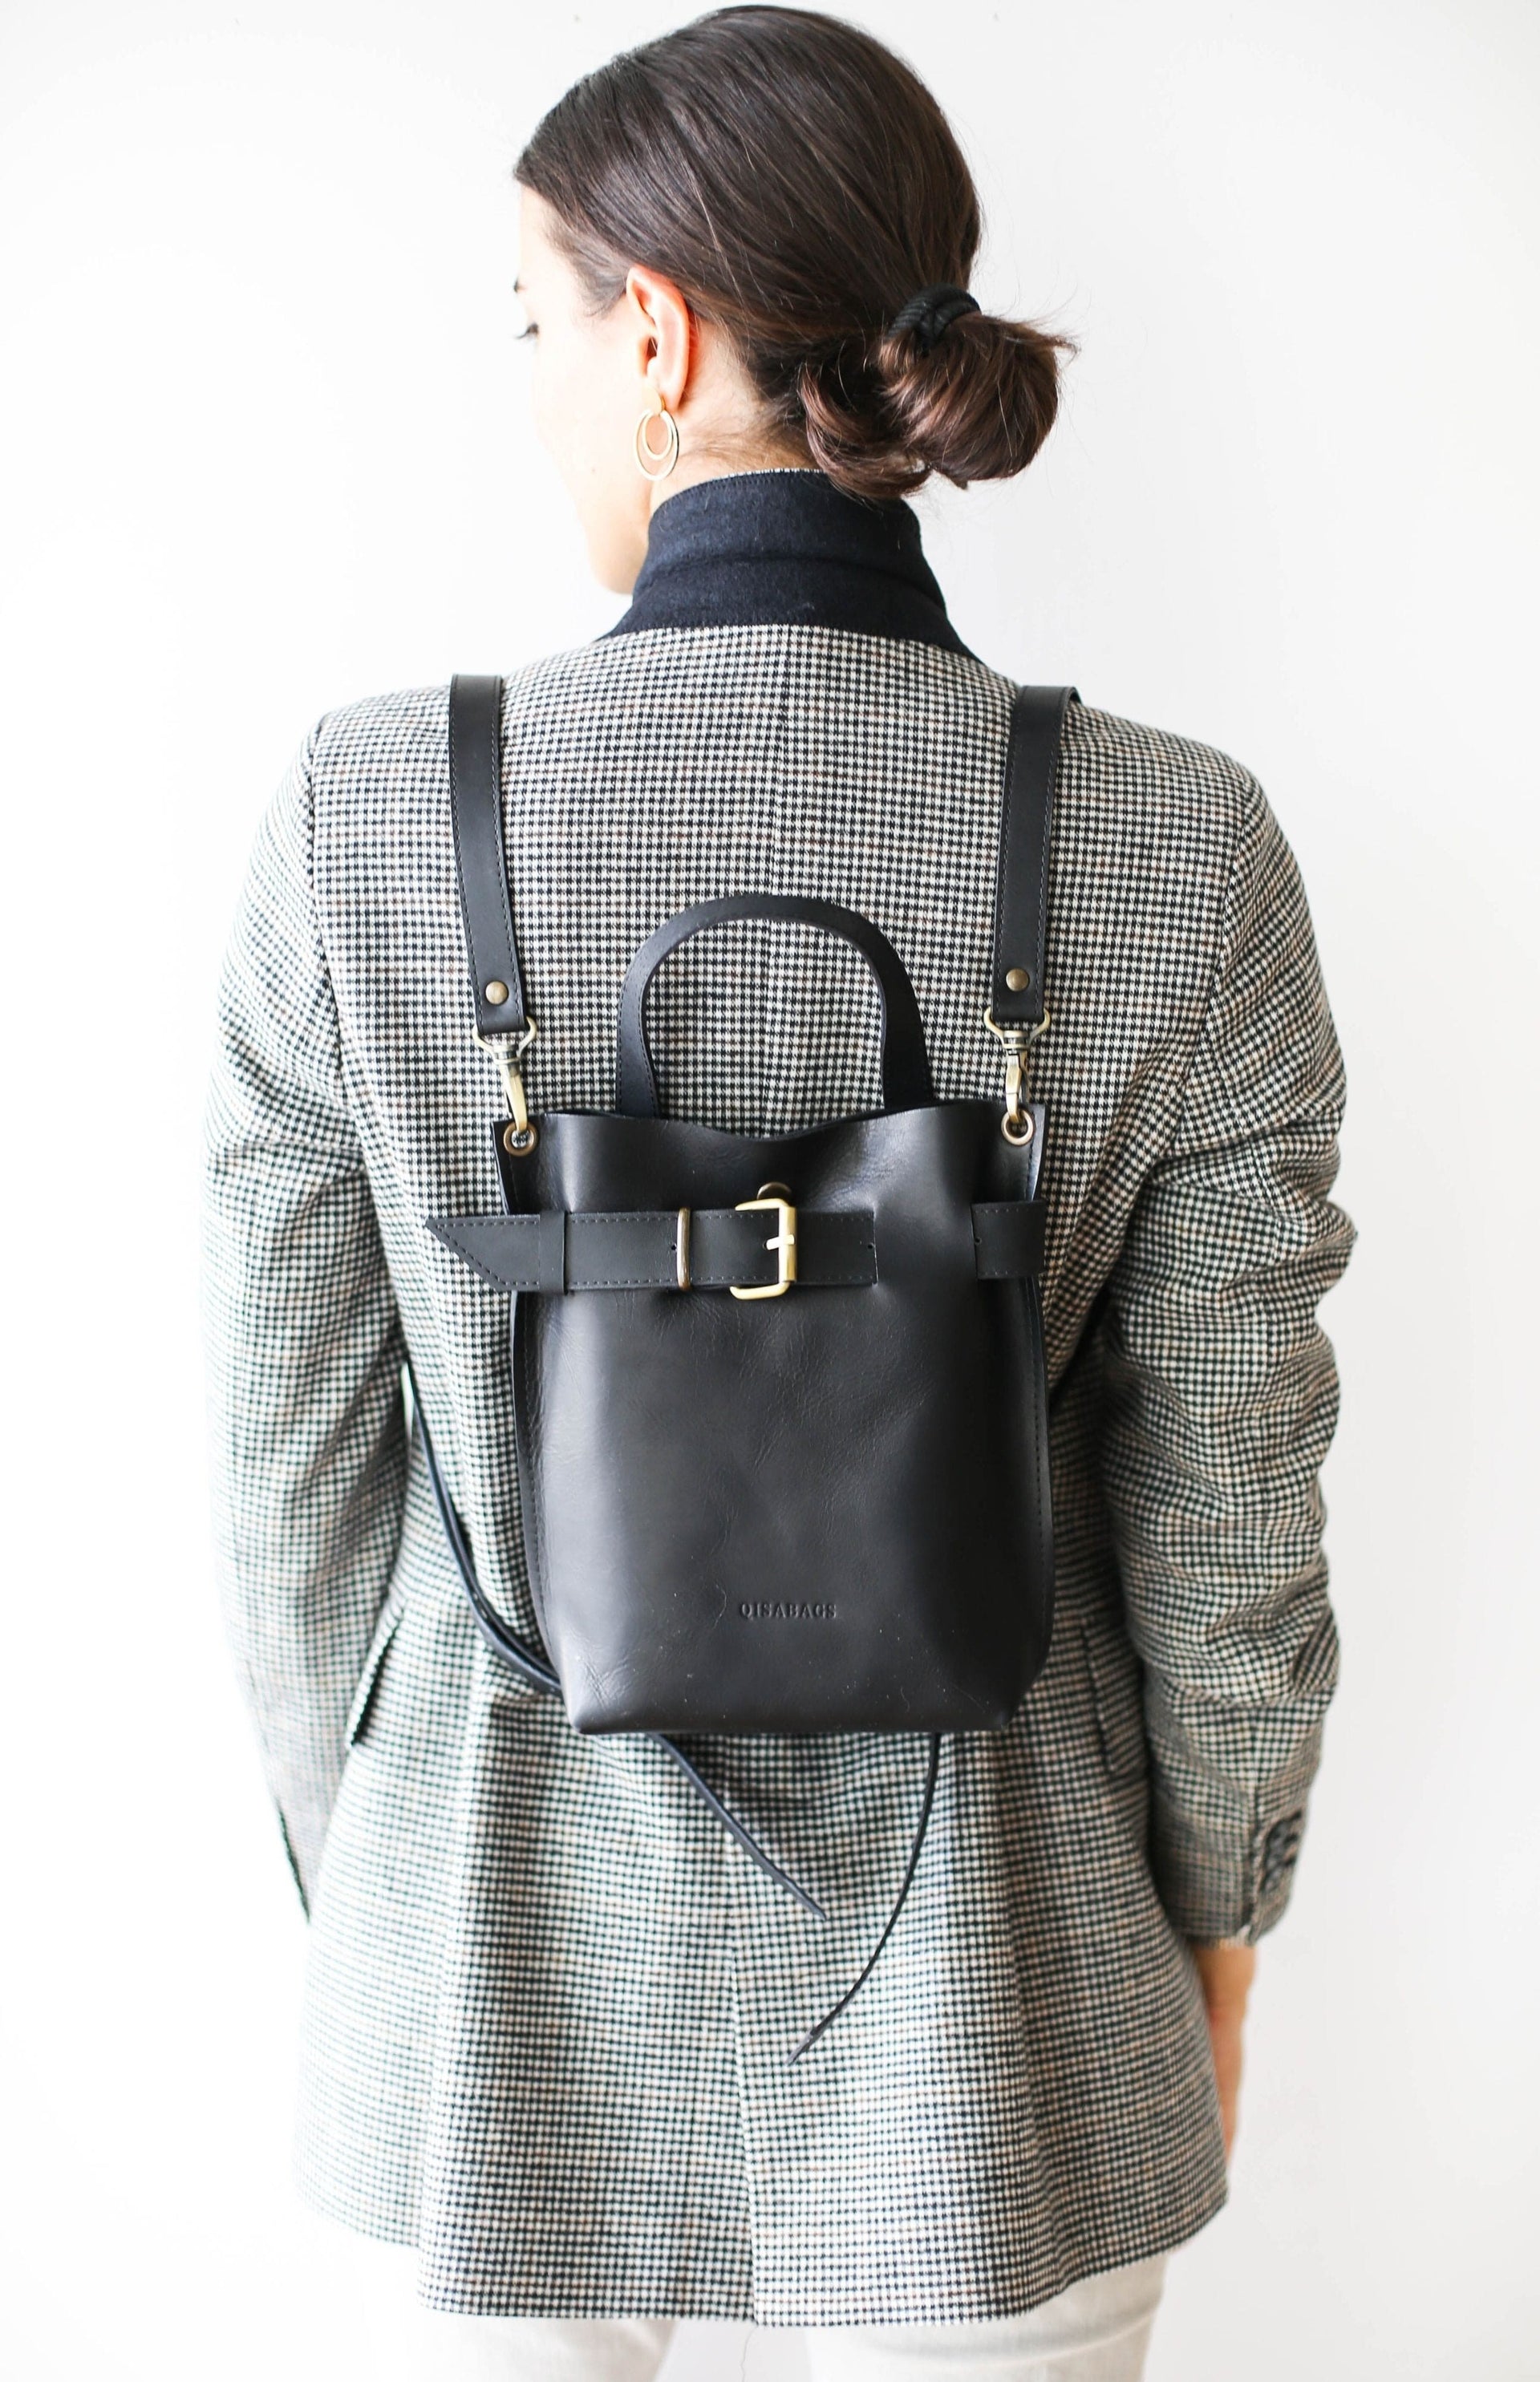 Handmade Black Leather Backpack